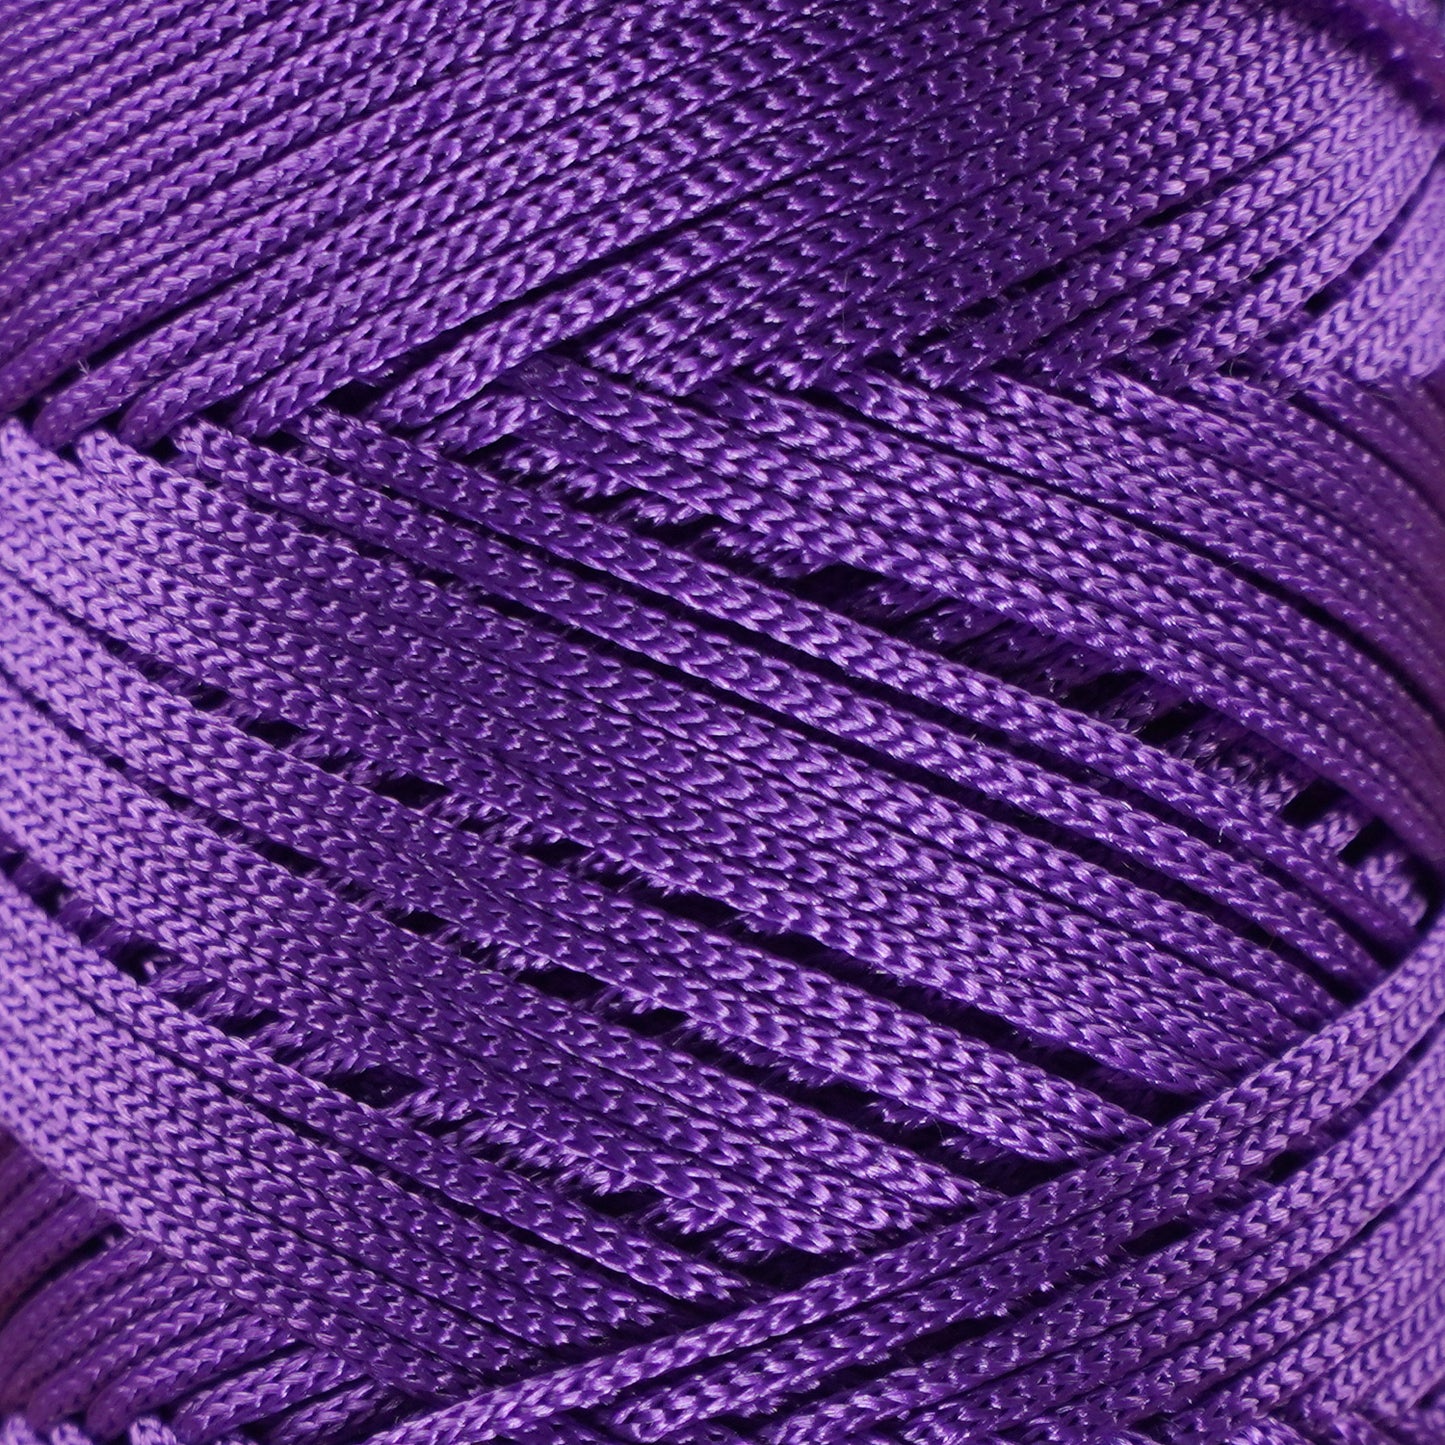 Polyester Macrame Cord 2mm x 250 yards (750 feet)  - Lilac